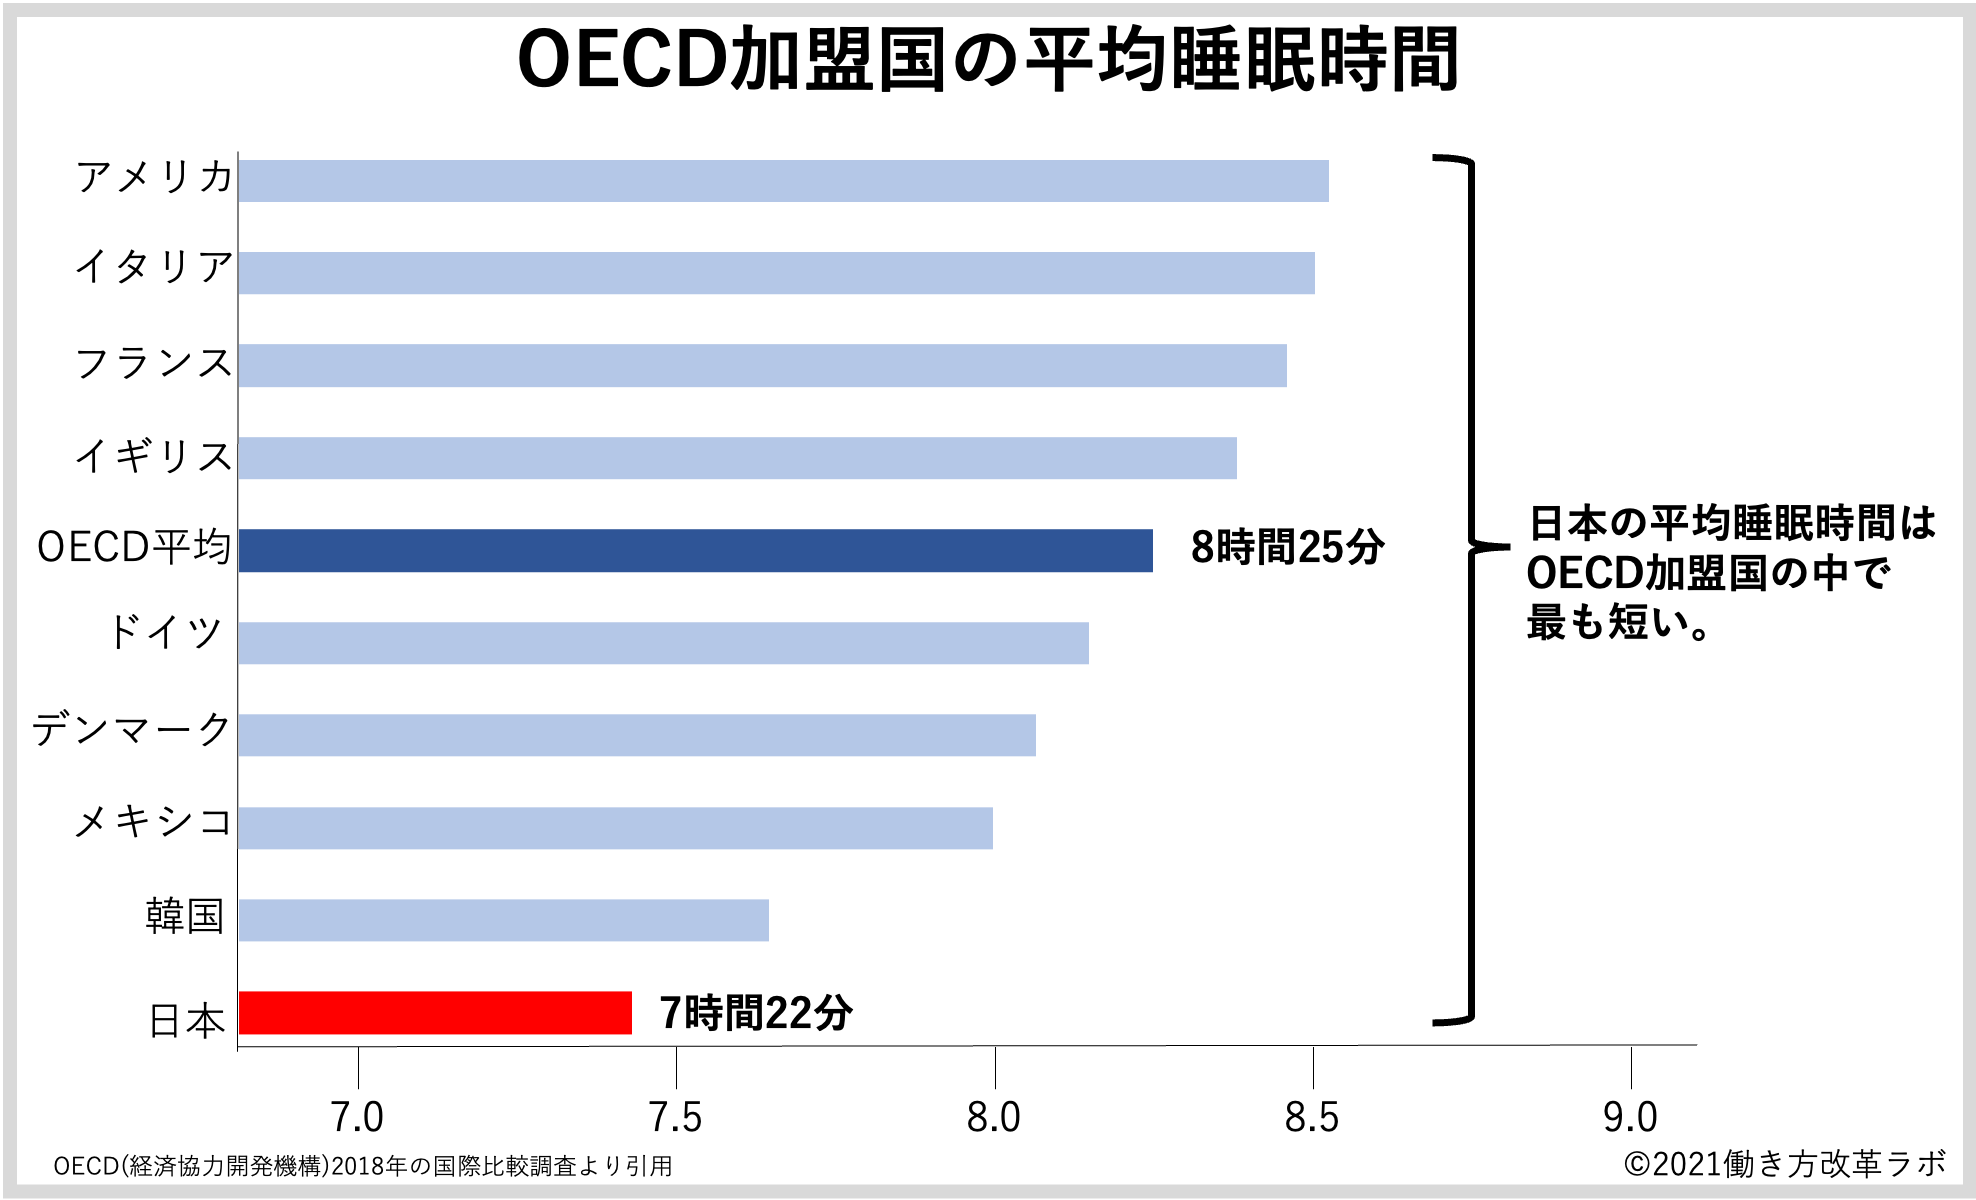 OECD加盟国の平均睡眠時間